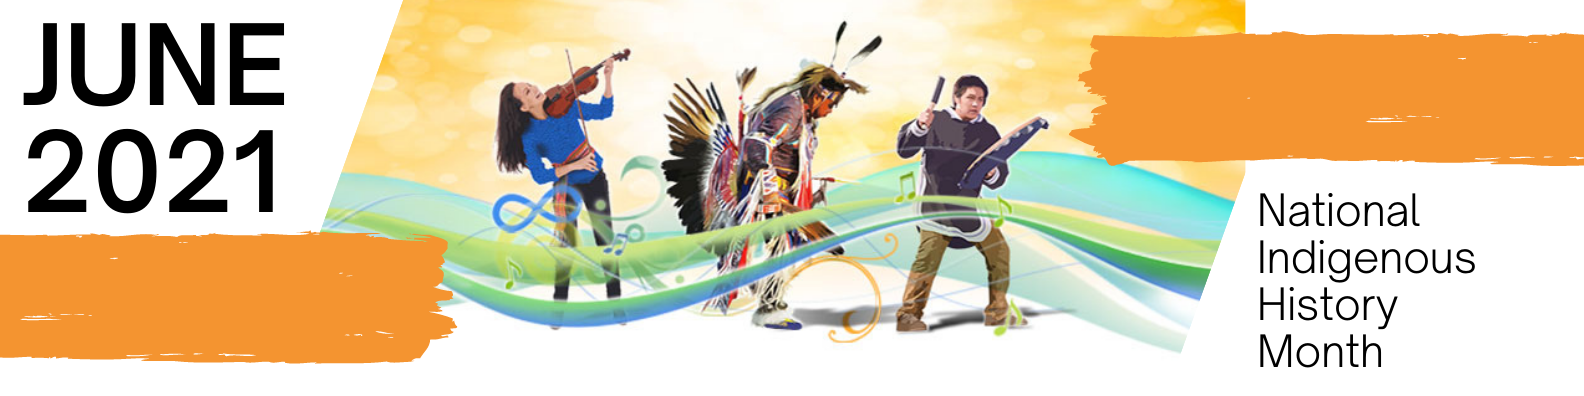 June 2021 Banner - National Indigenous History Month